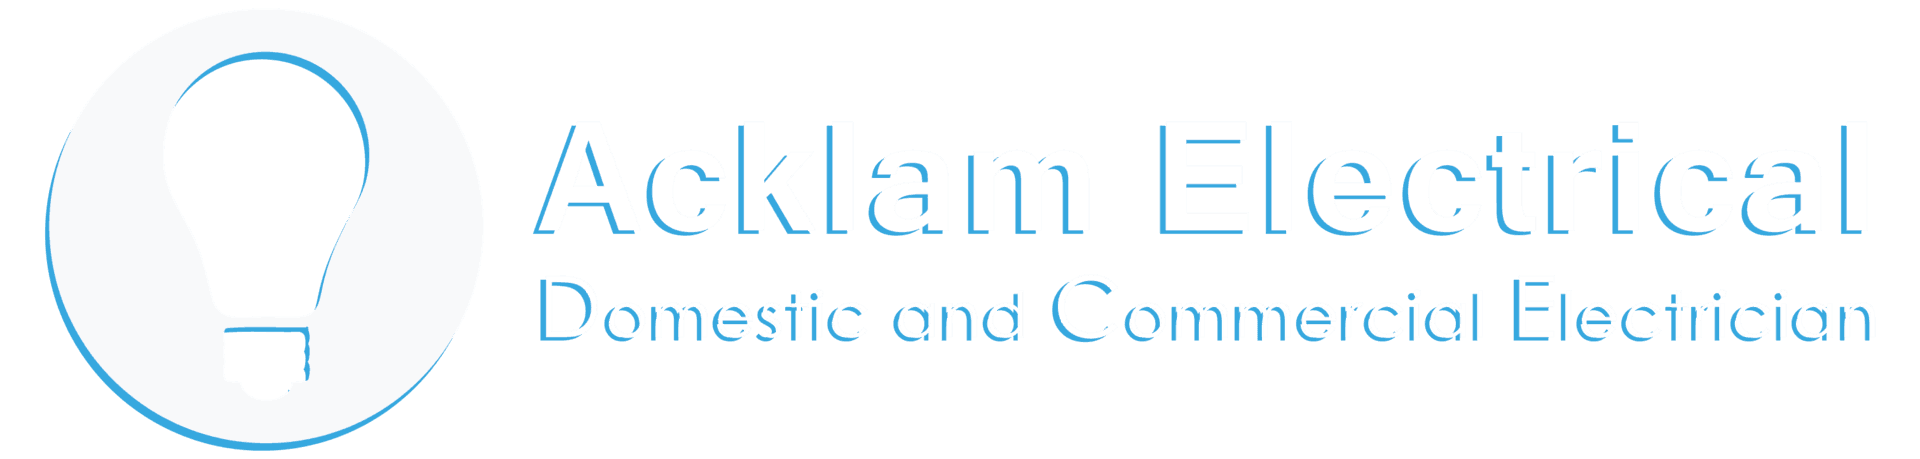 Acklam Electrical company logo